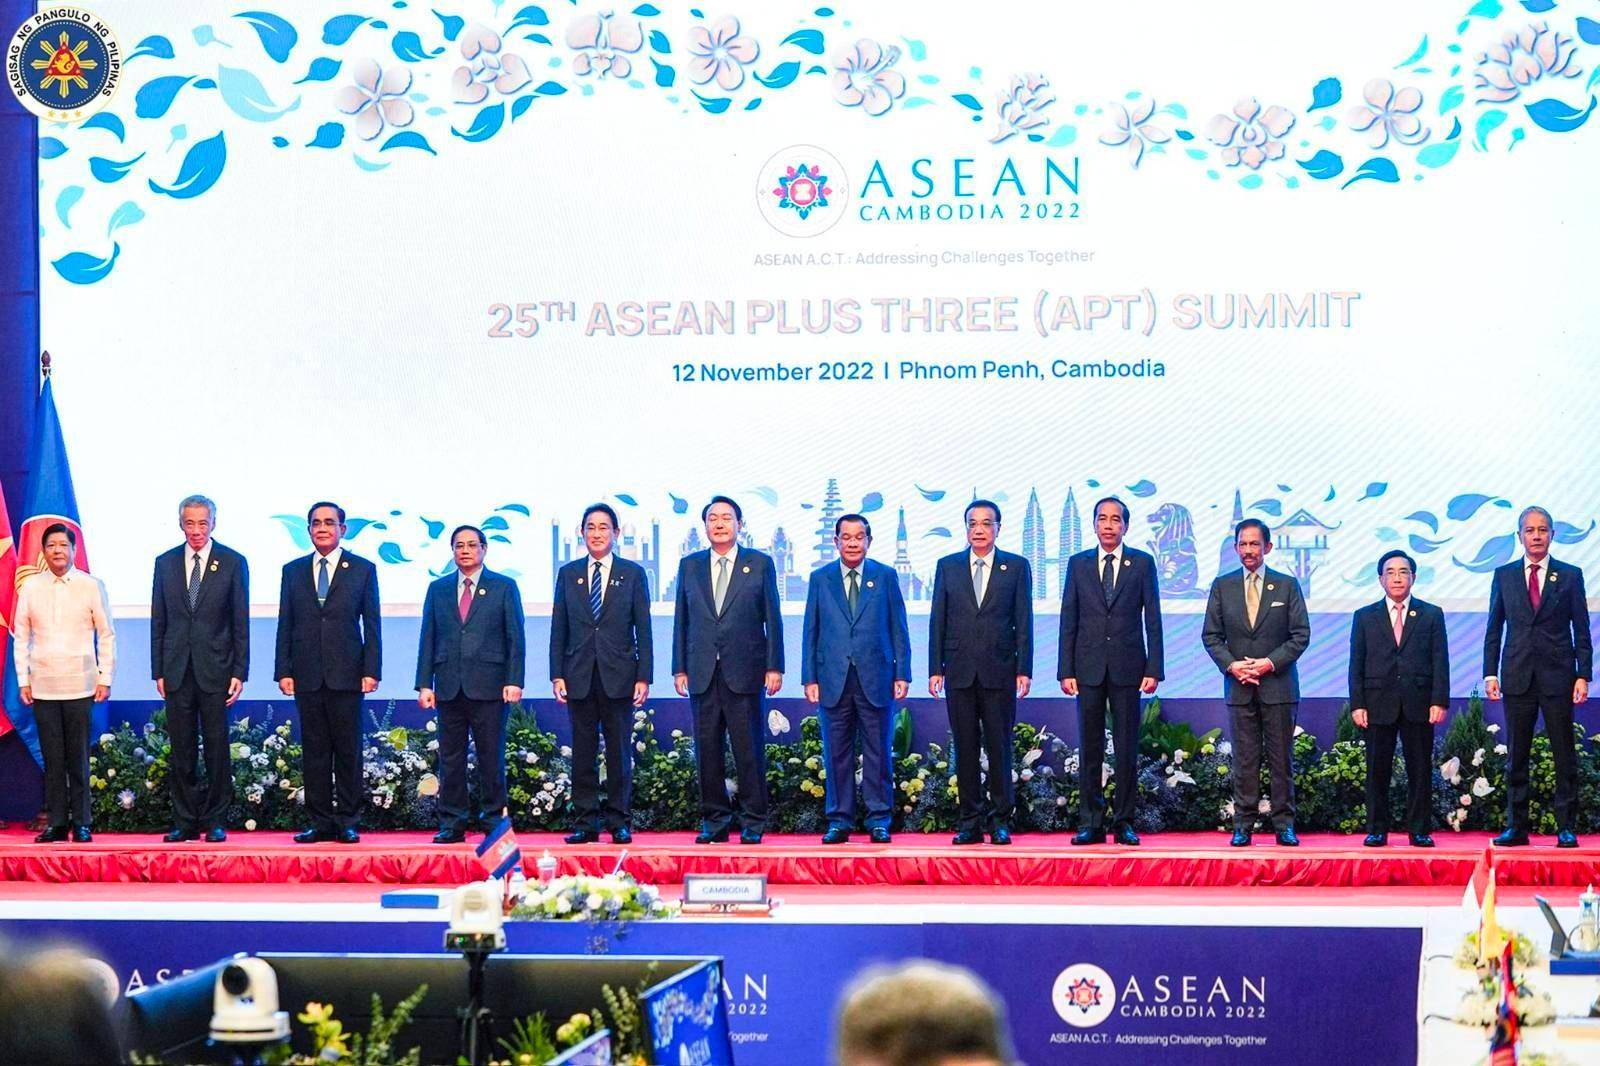 ASEAN leaders standing on stage